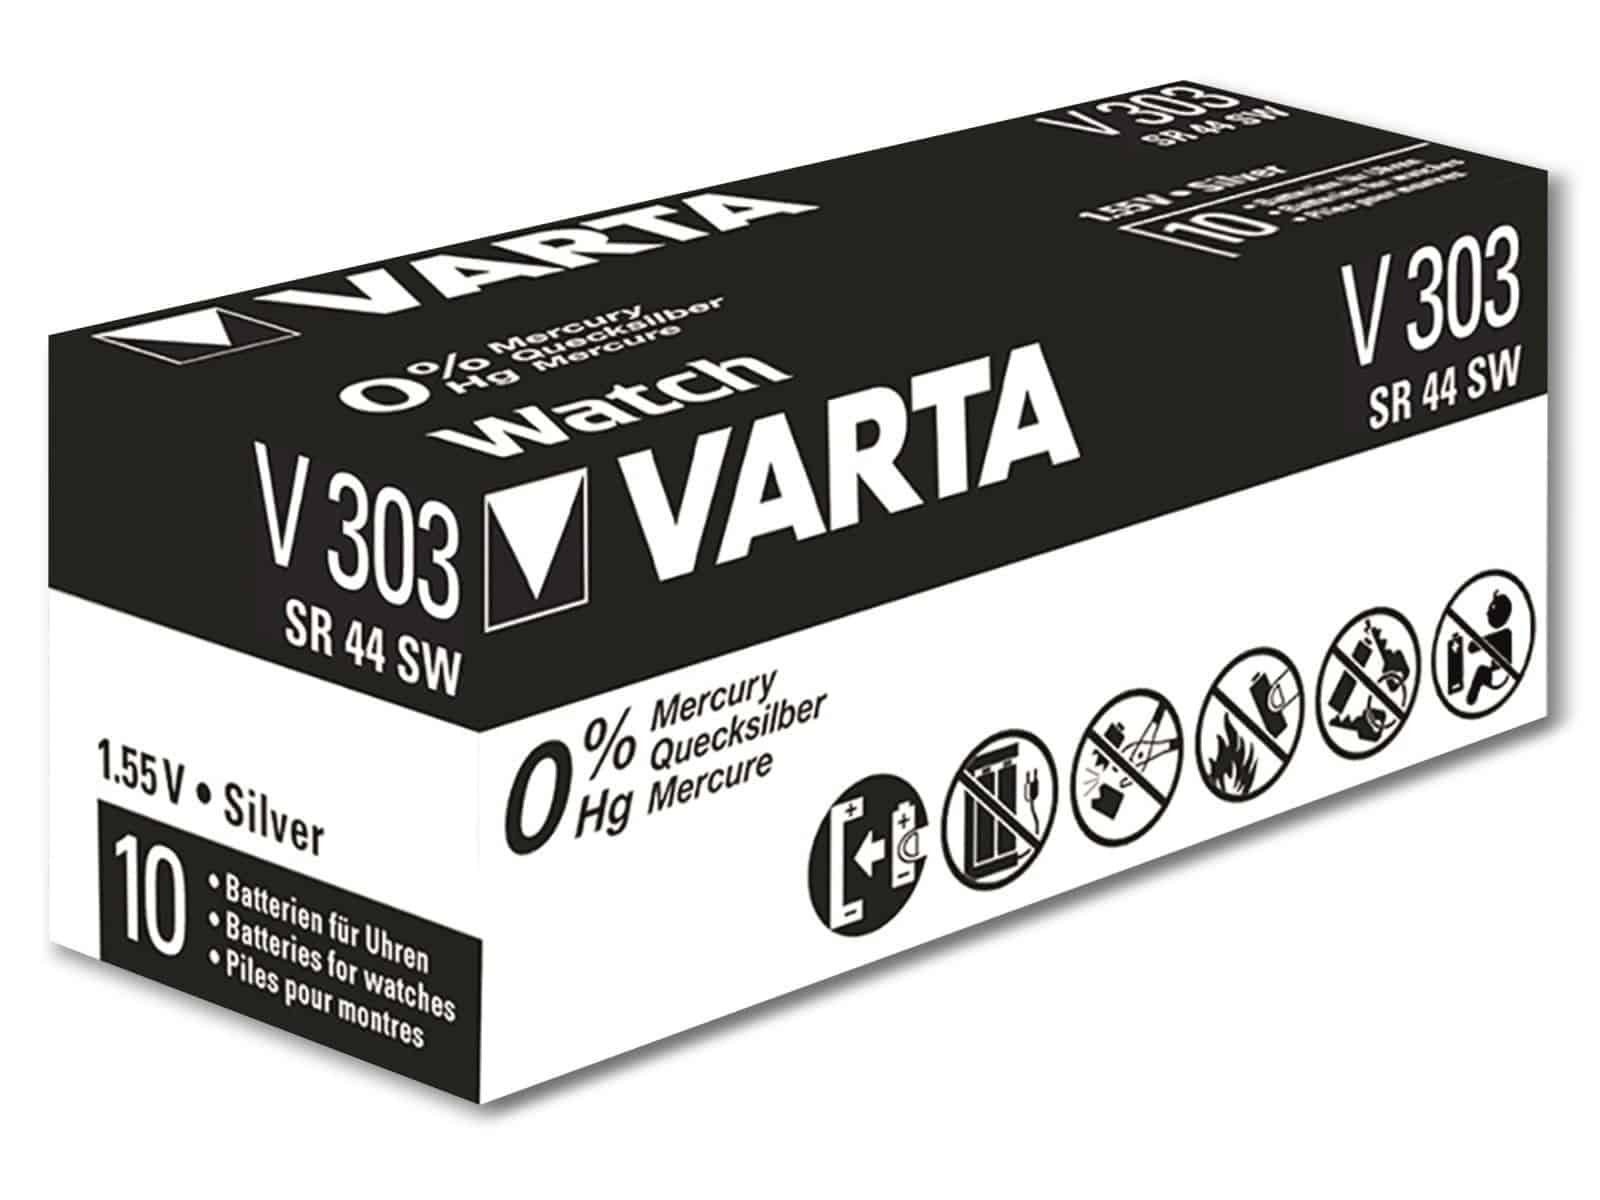 VARTA VARTA Knopfzelle Silver SR44, Oxide, Knopfzelle 303 1.55V